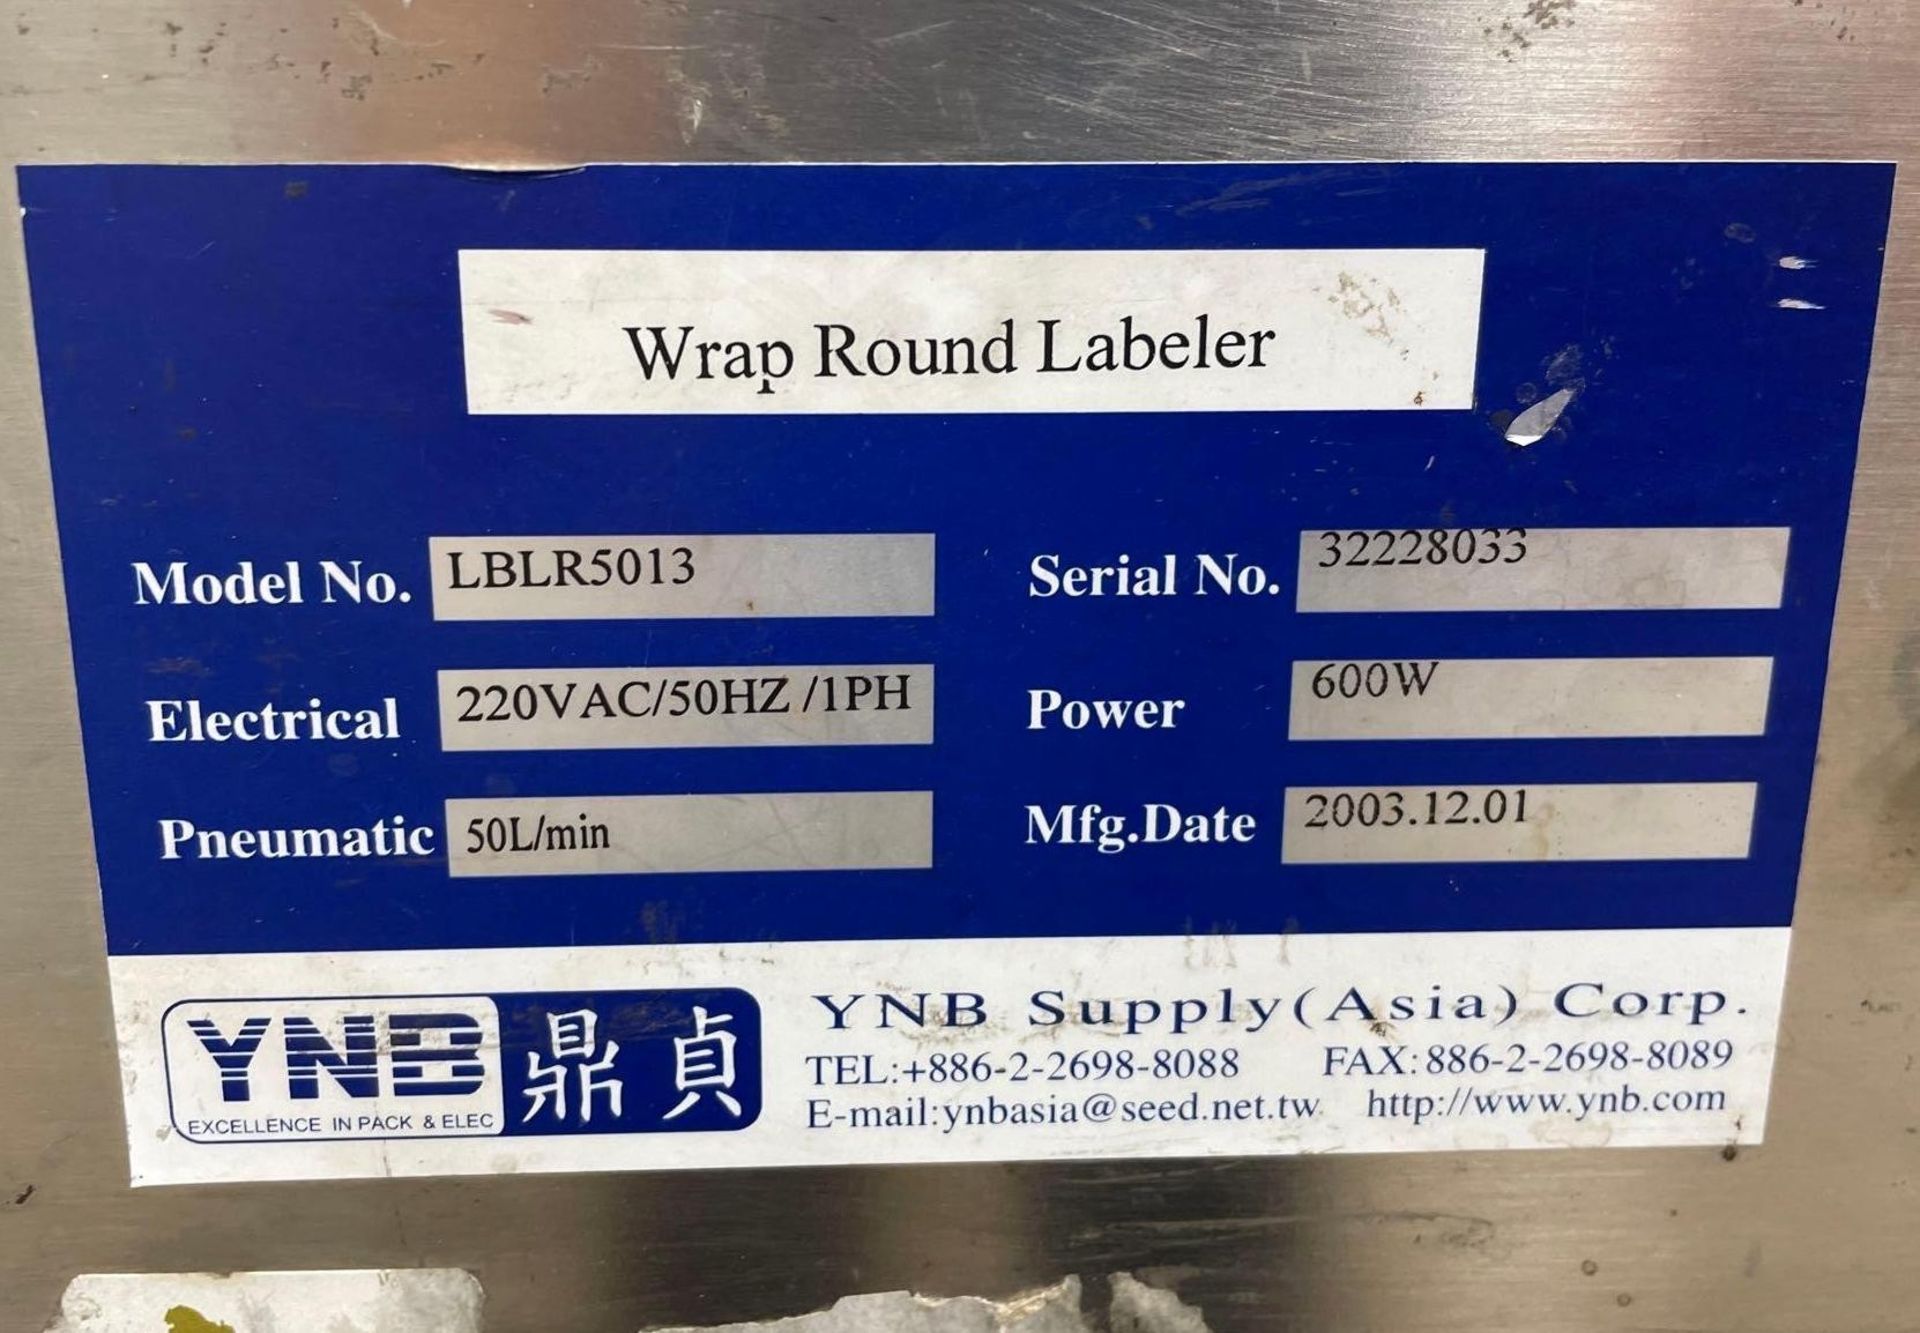 Year: 2003, Make: YNB Supply, Model: LBLR5013, Type: Wrap Round Label Printer, Serial Number: - Image 16 of 16